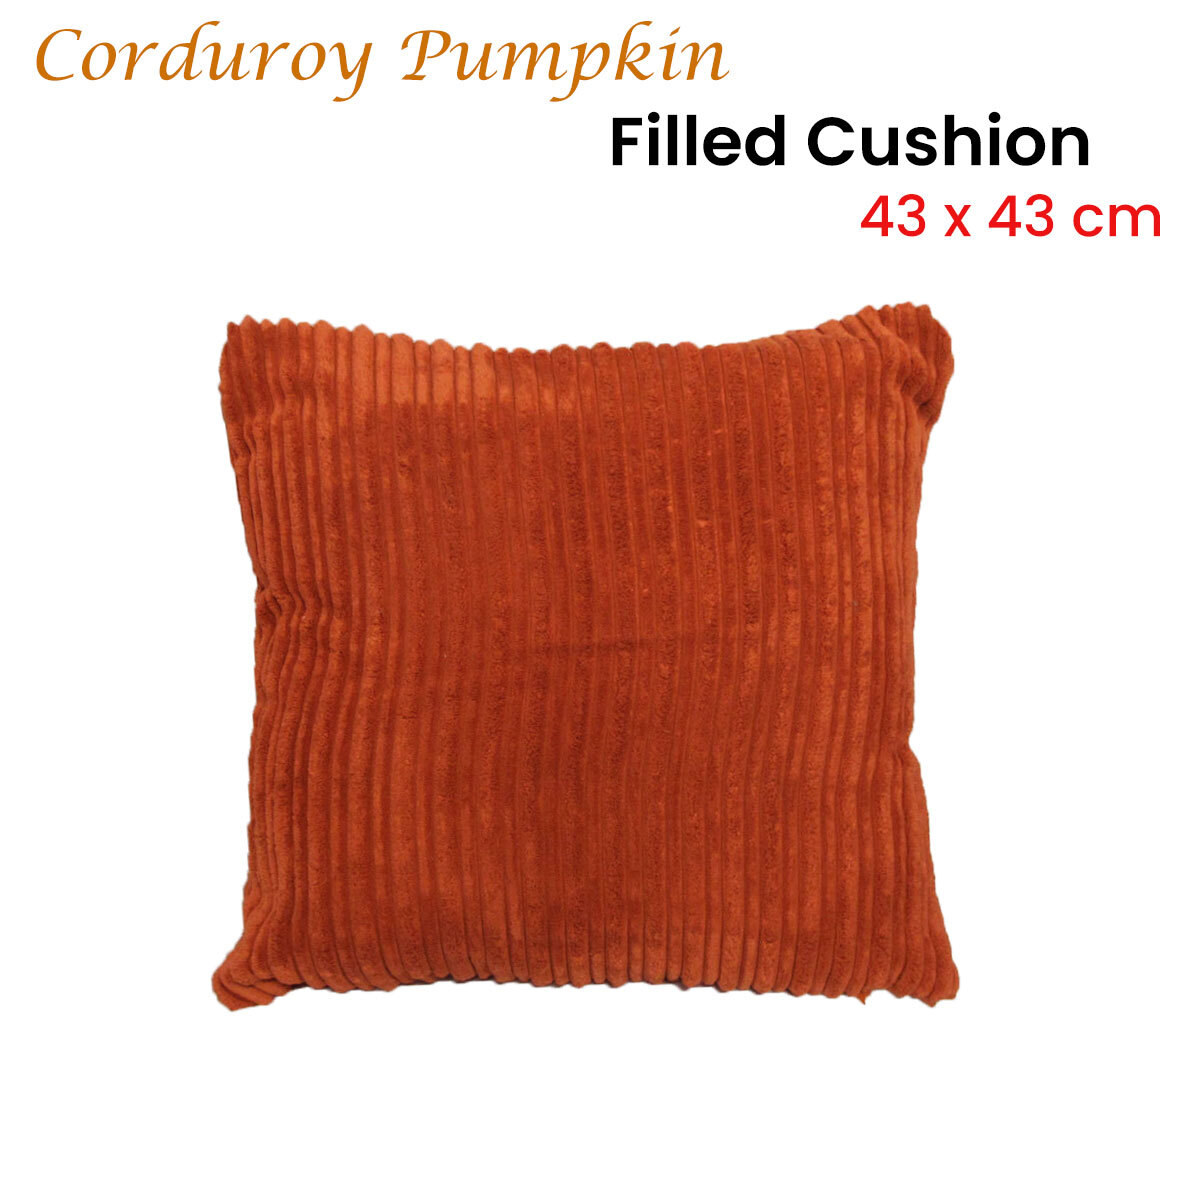 Corduroy Corduroy Pumpkin Filled Cushion 43 x 43 cm